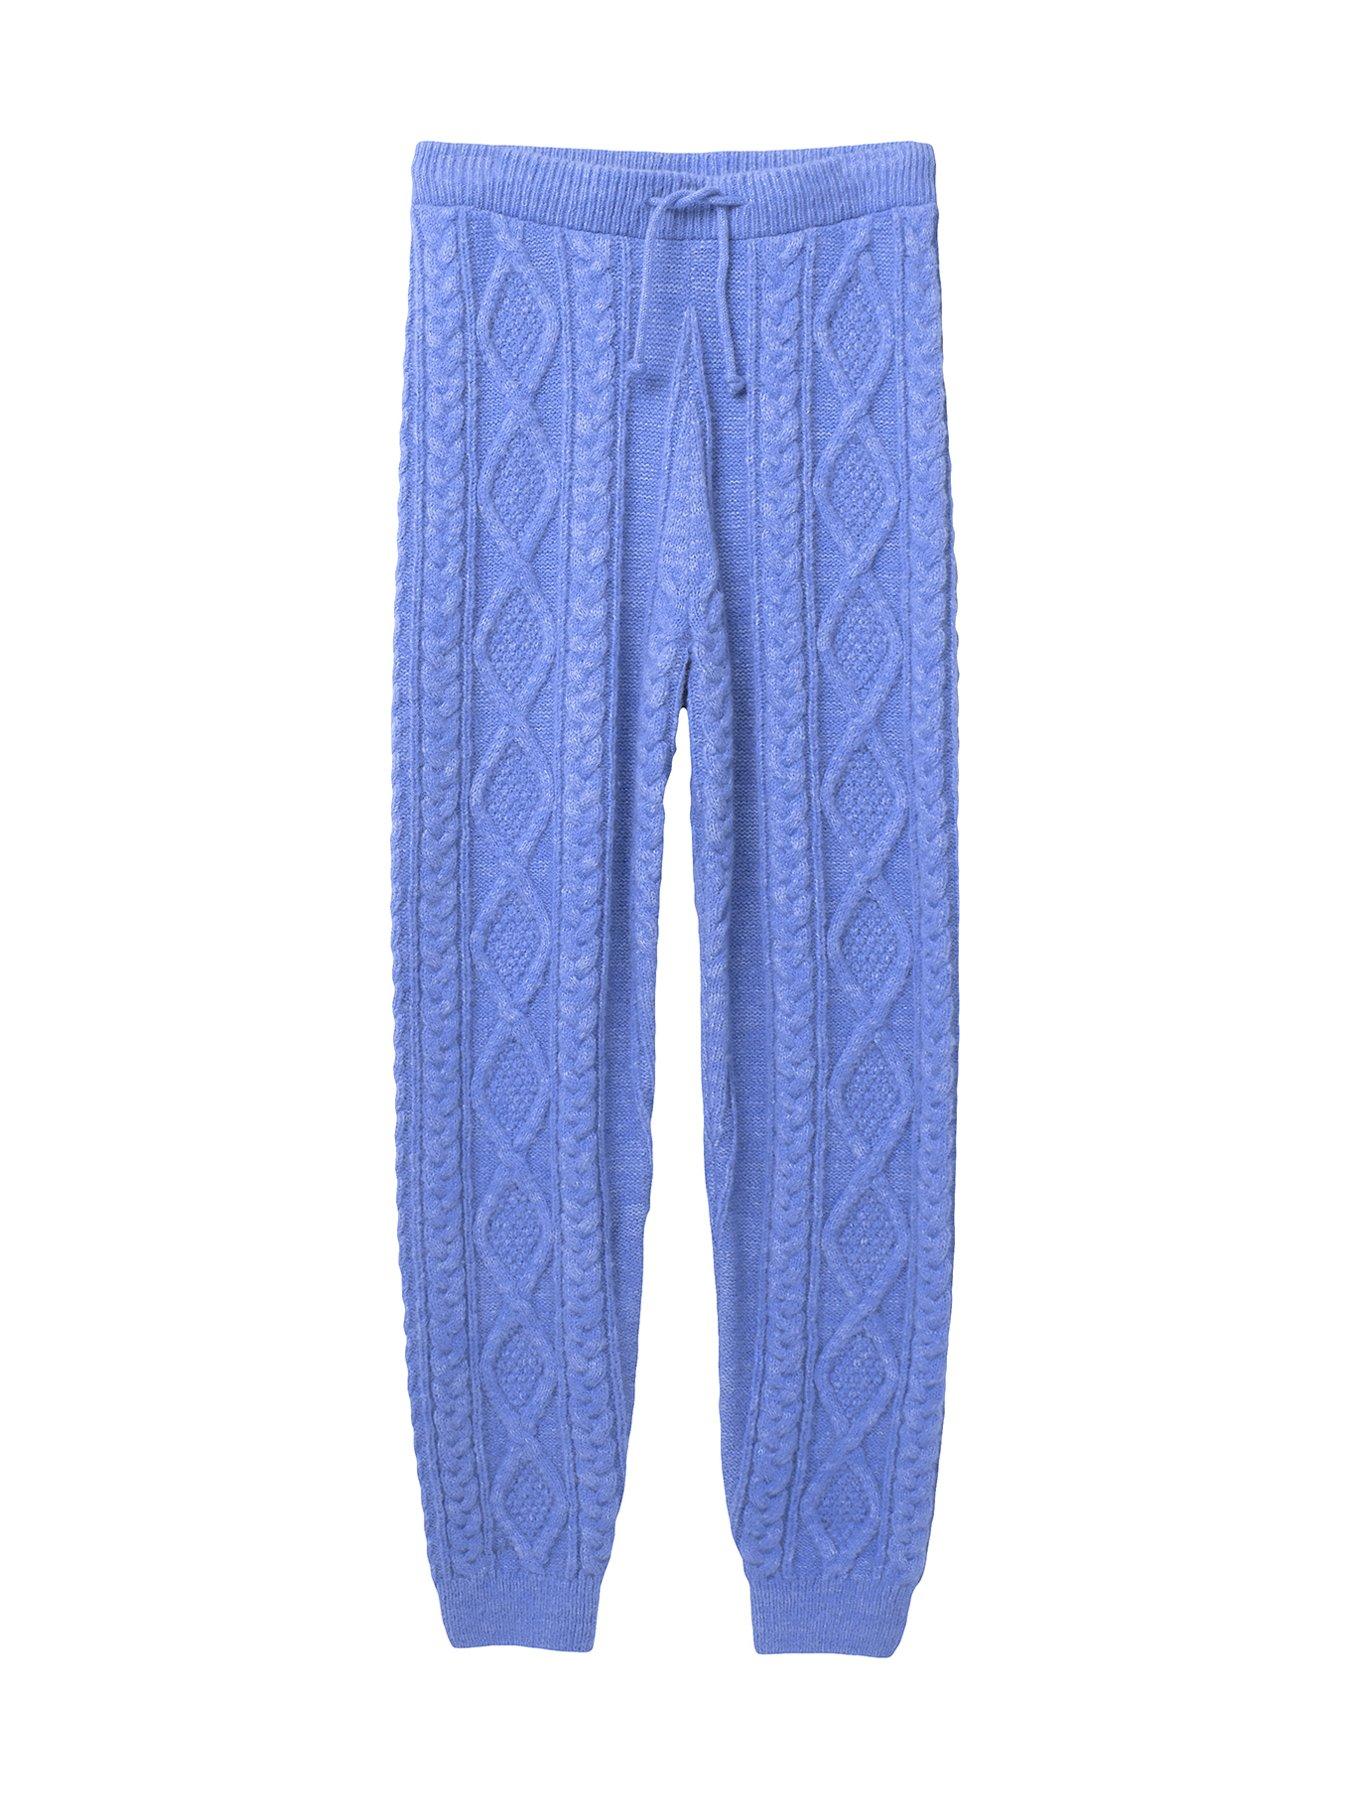 Joe Browns Sloe Joes Cable Knit Trousers - Blue